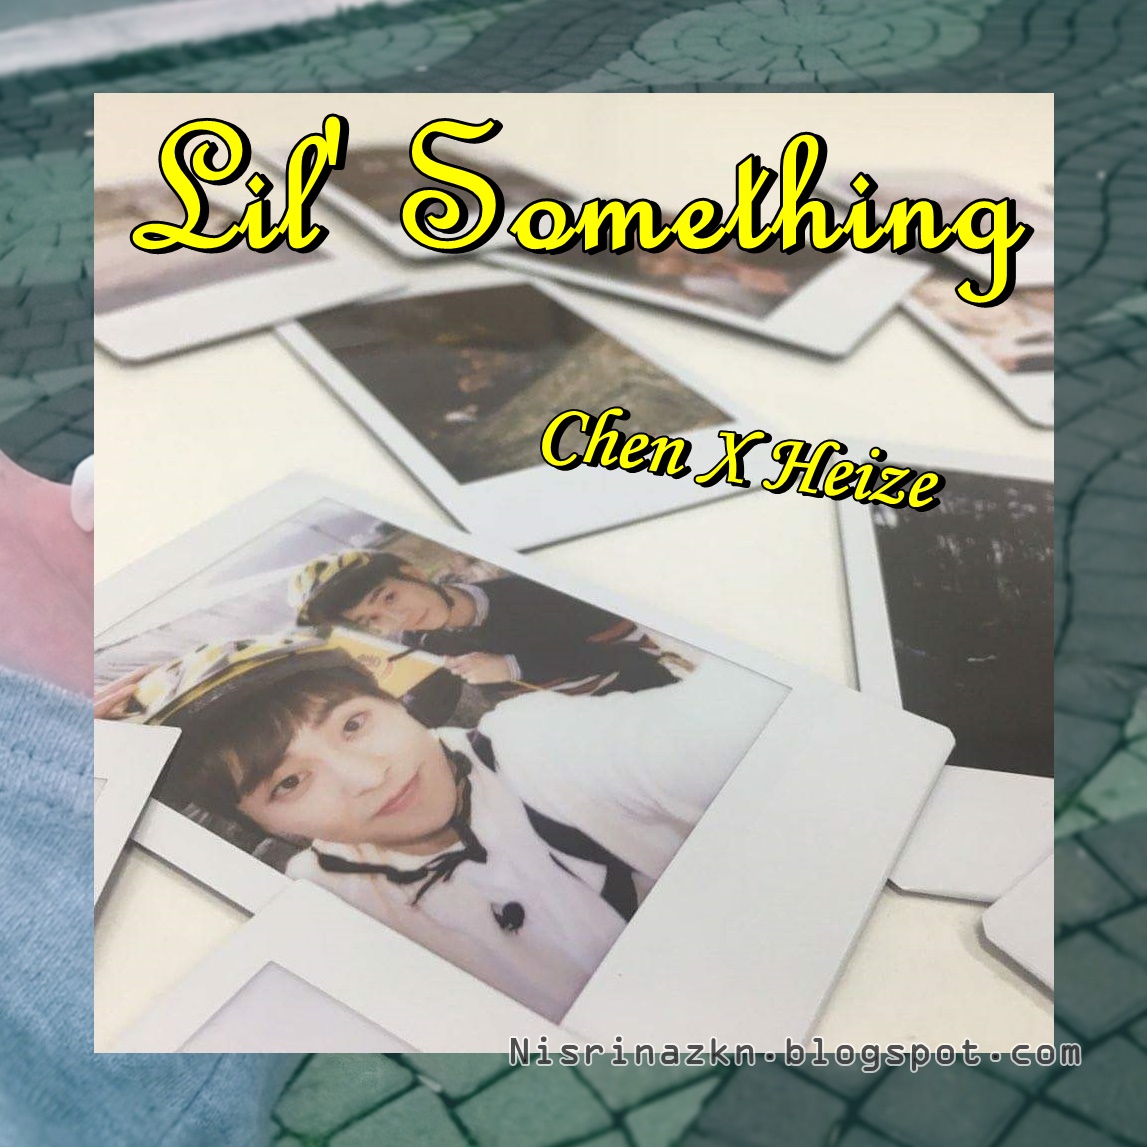 Lirik Lagu Chen X Heize Lil Something Dan Terjemahan Hangul